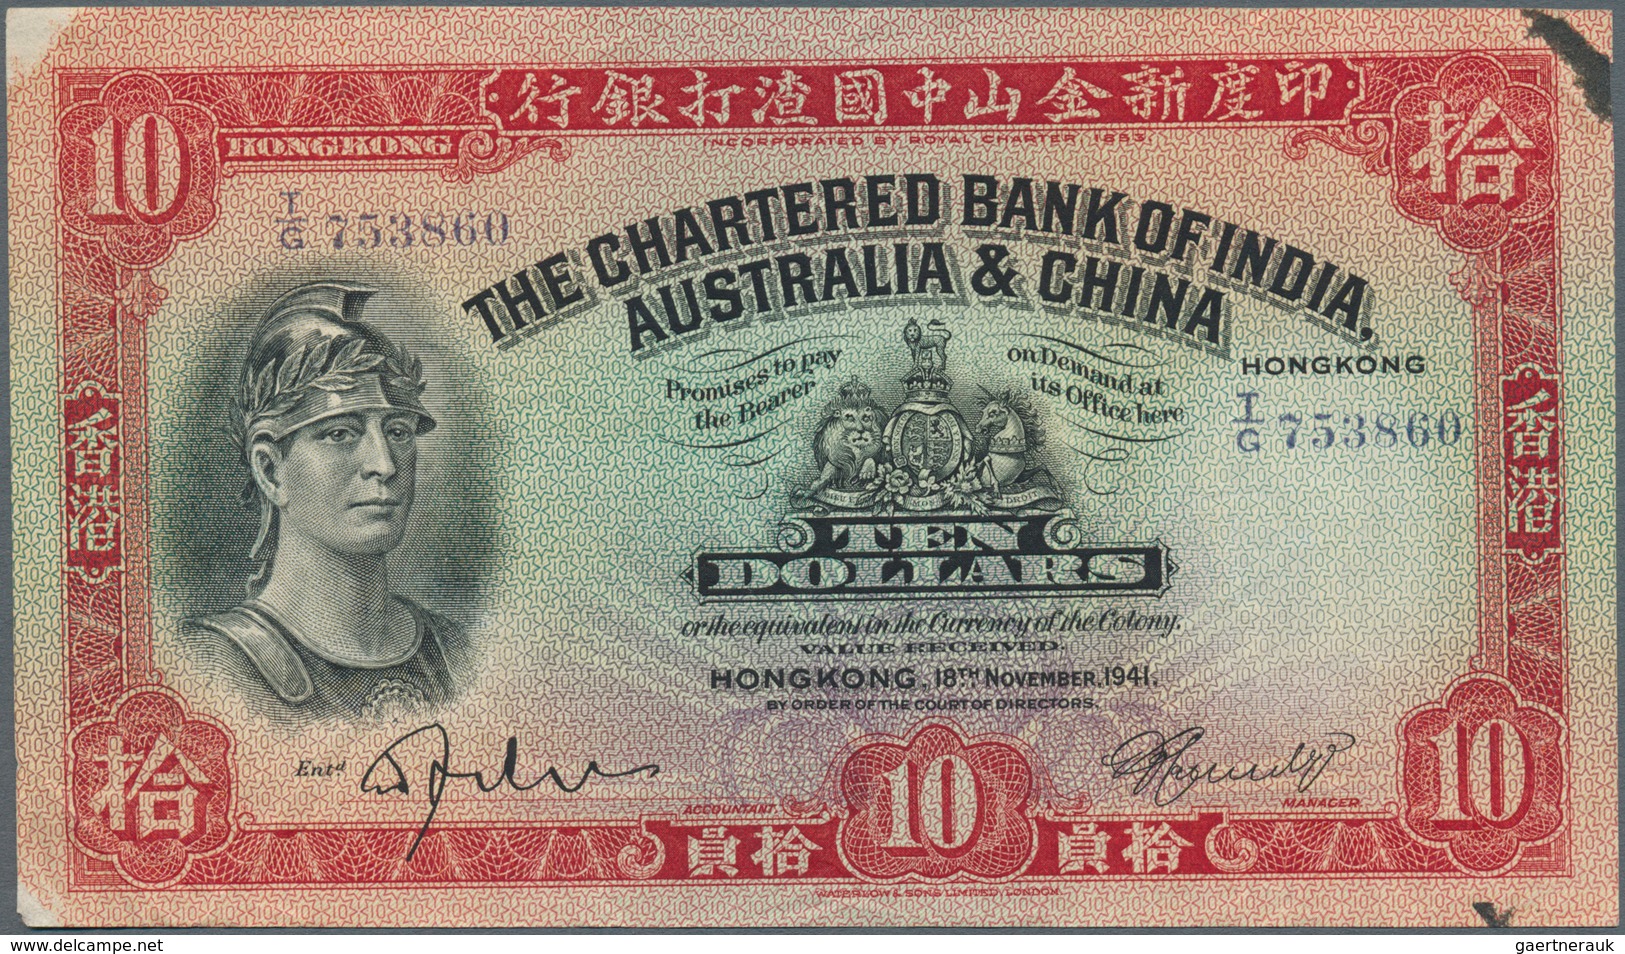 01675 Hong Kong: 10 Dollars 1941 P. 55, Used With Folds, Paper Abrasion At Upper Left Corner, Ink Stain At - Hong Kong